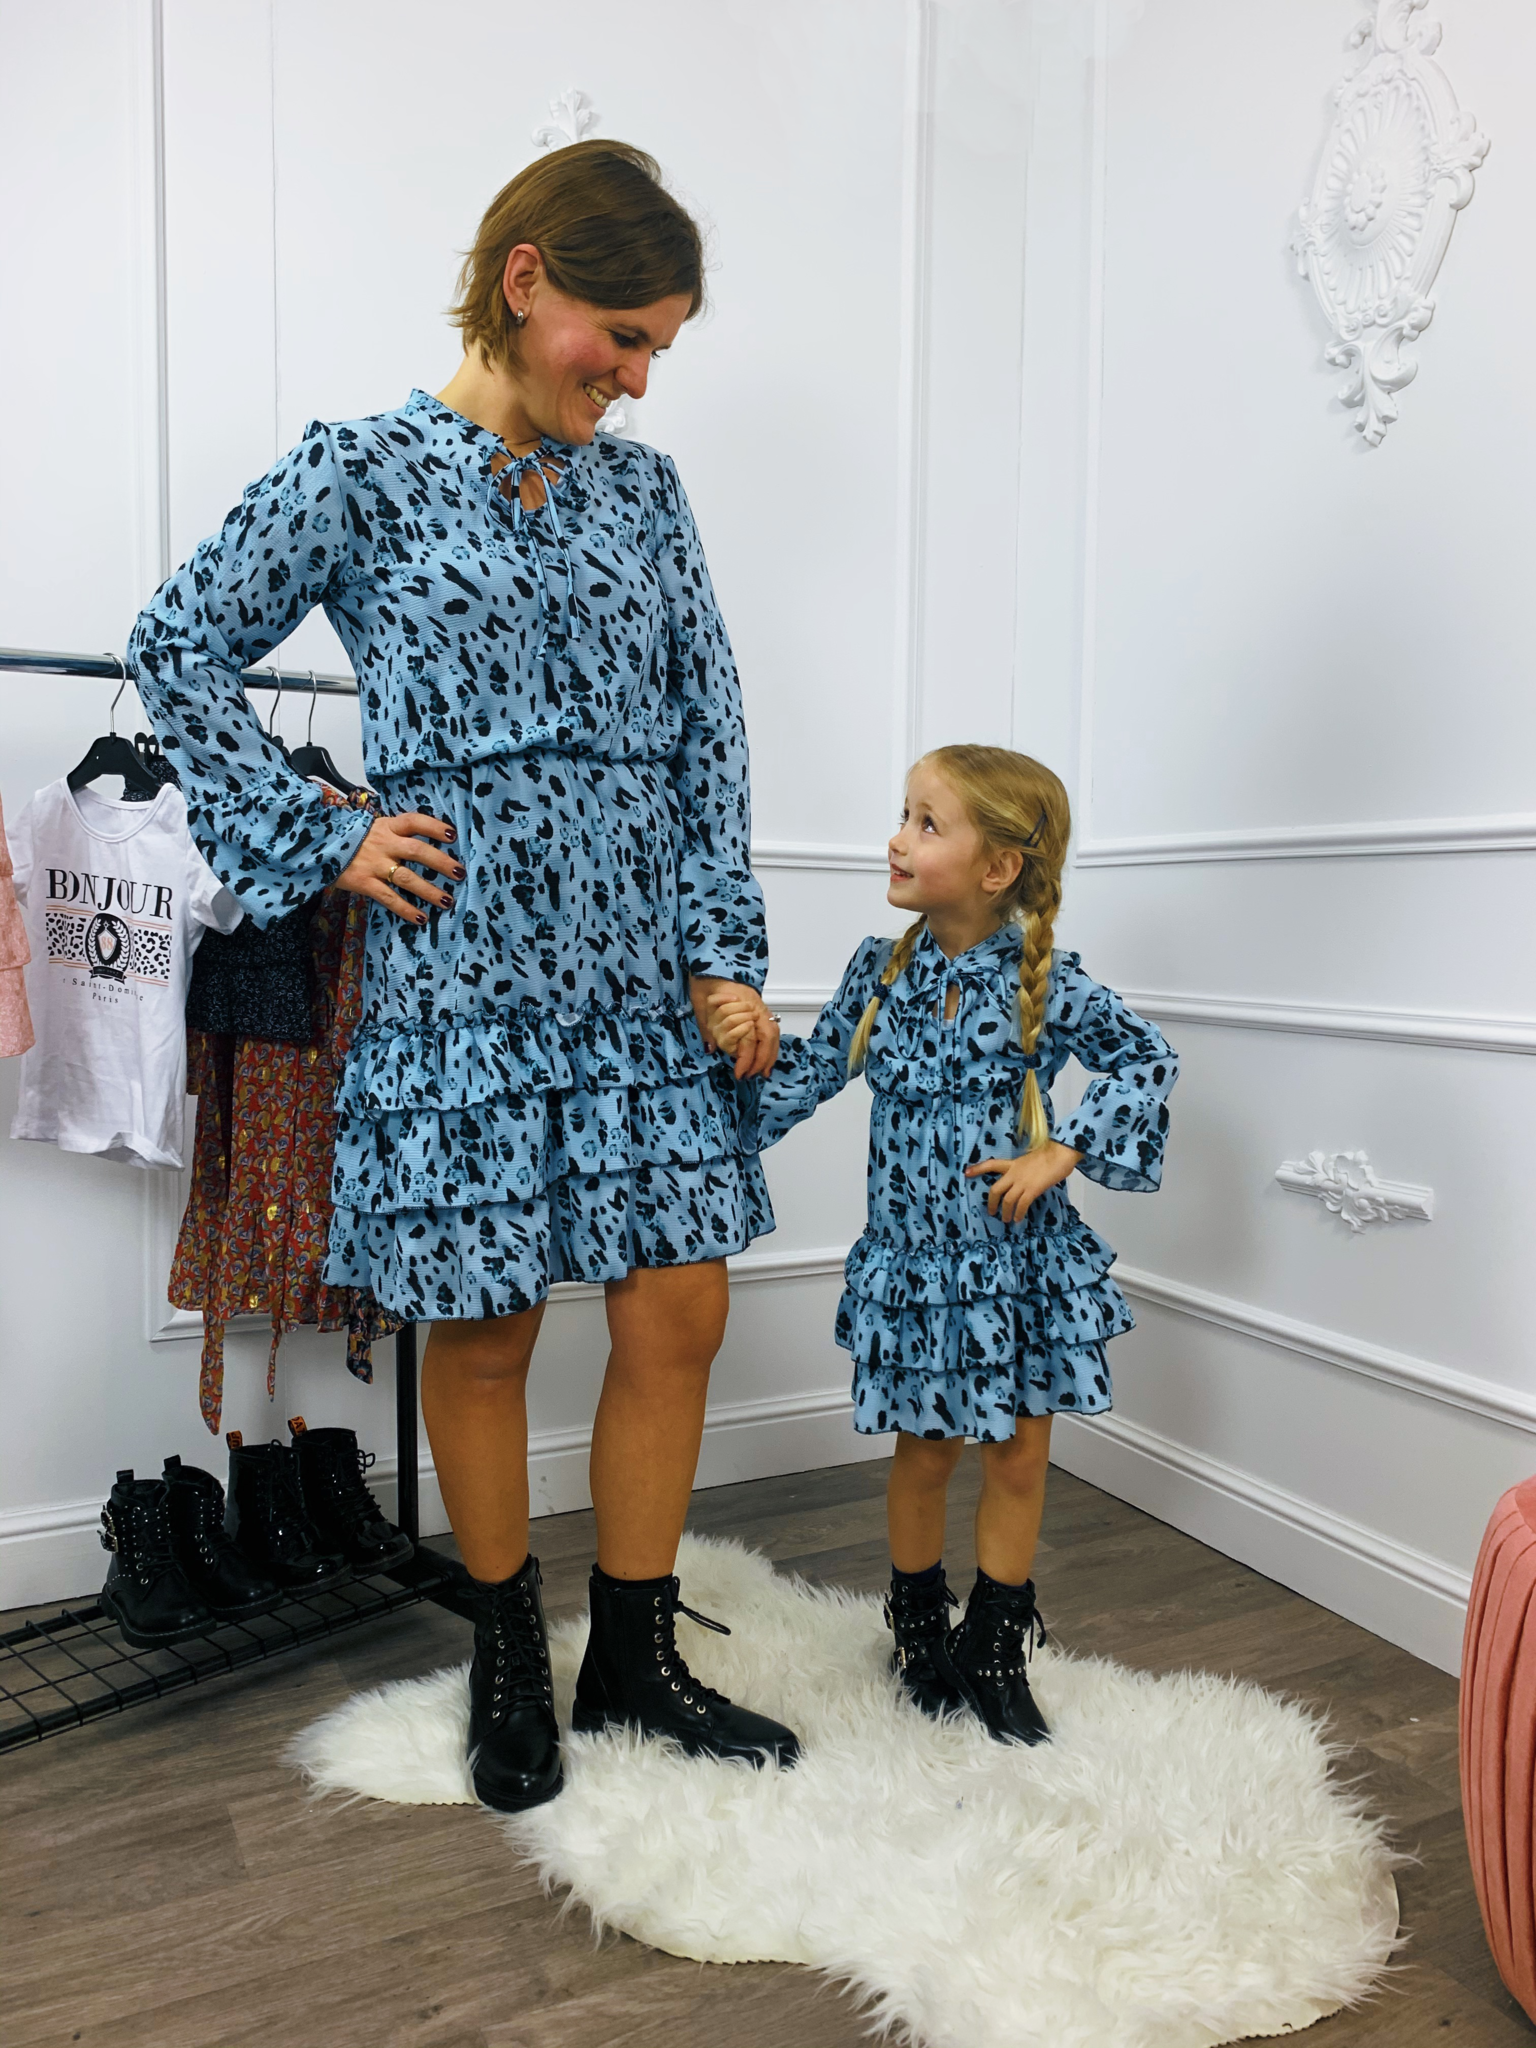 Geit Voorschrijven Dwang Ruffle jurkje minty blauw | Babes en Binkies